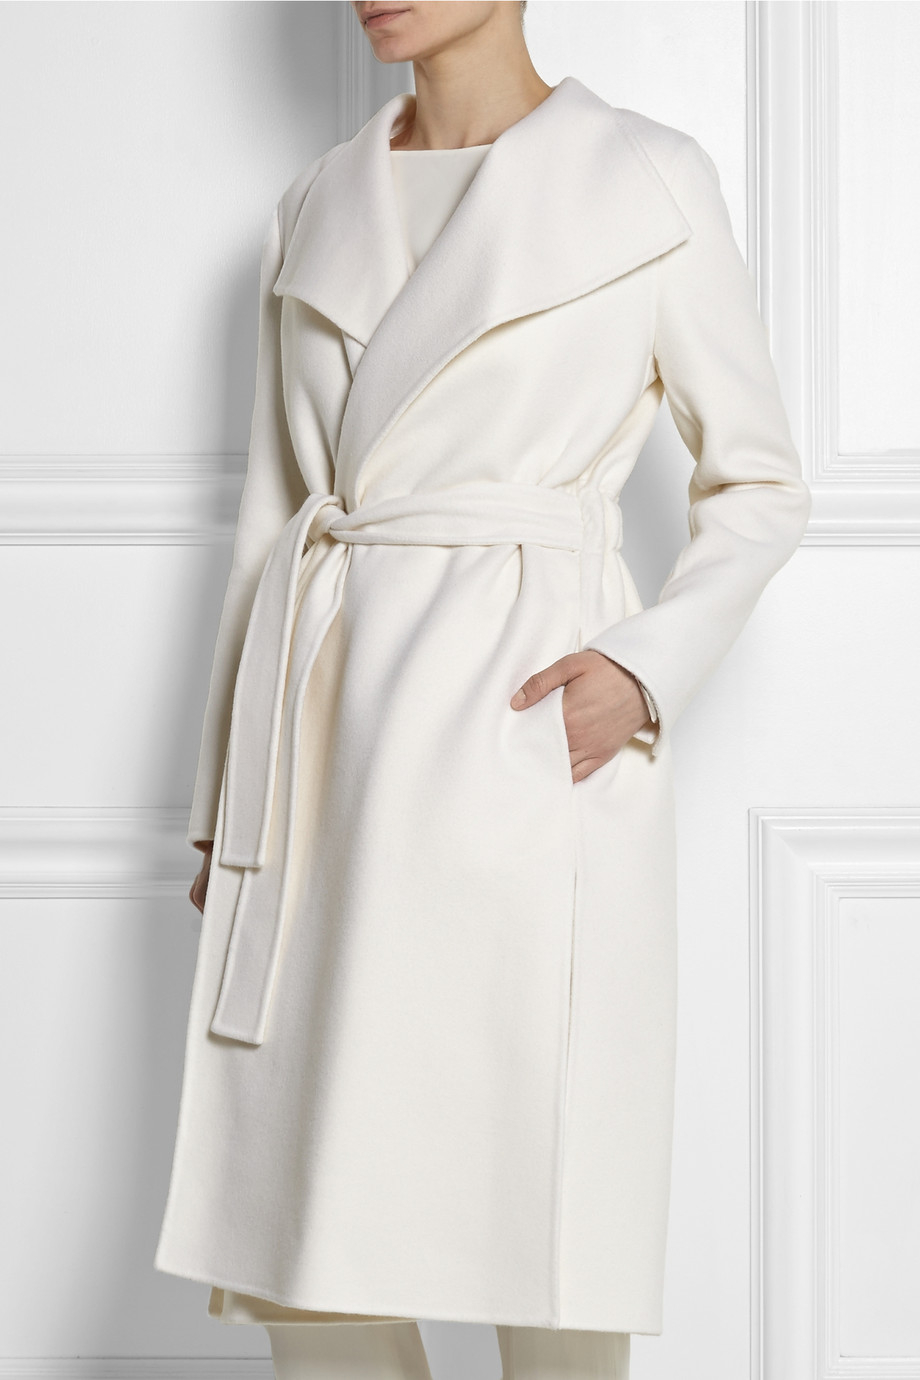 White Cashmere Coat - Coat Nj